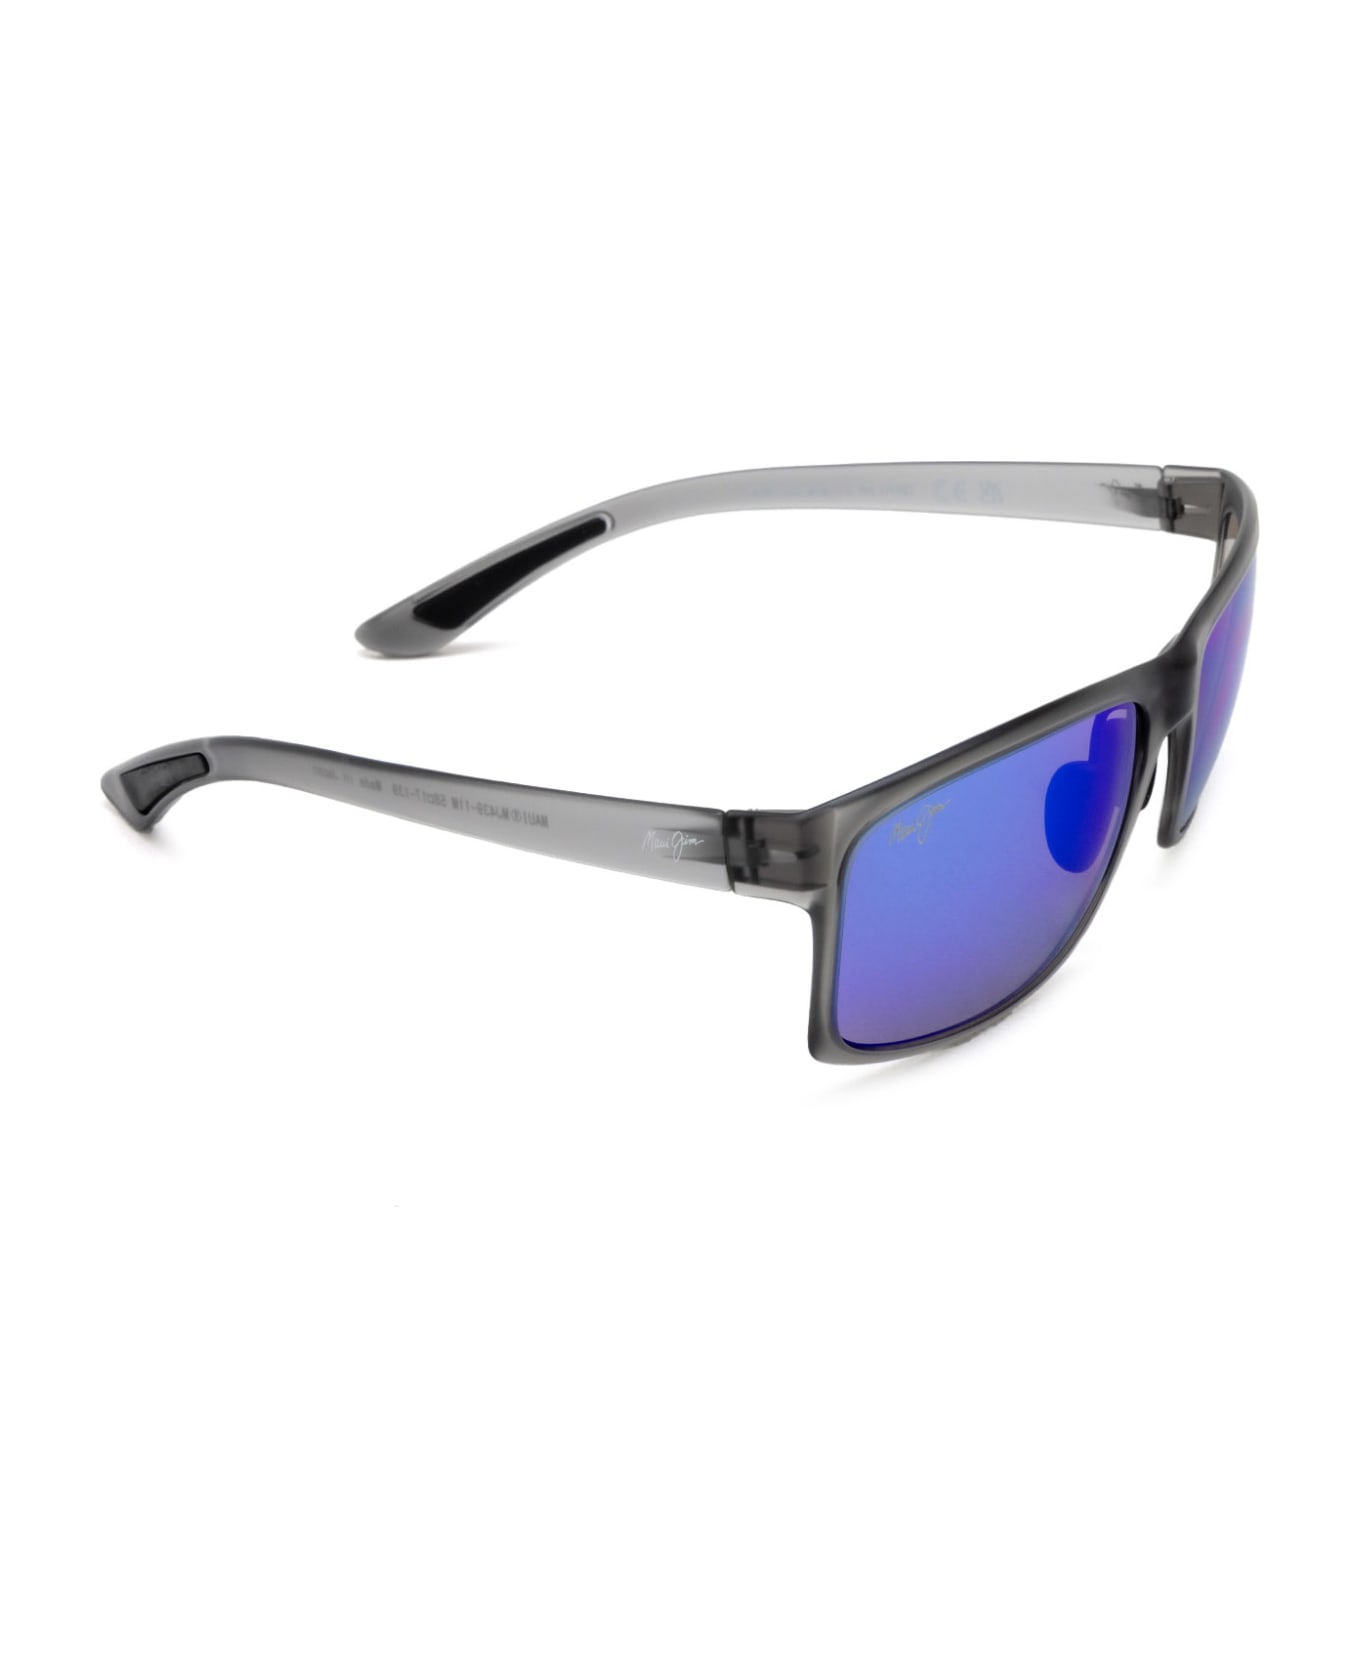 Maui Jim Mj439 Translucent Matte Grey Sunglasses - Translucent Matte Grey サングラス